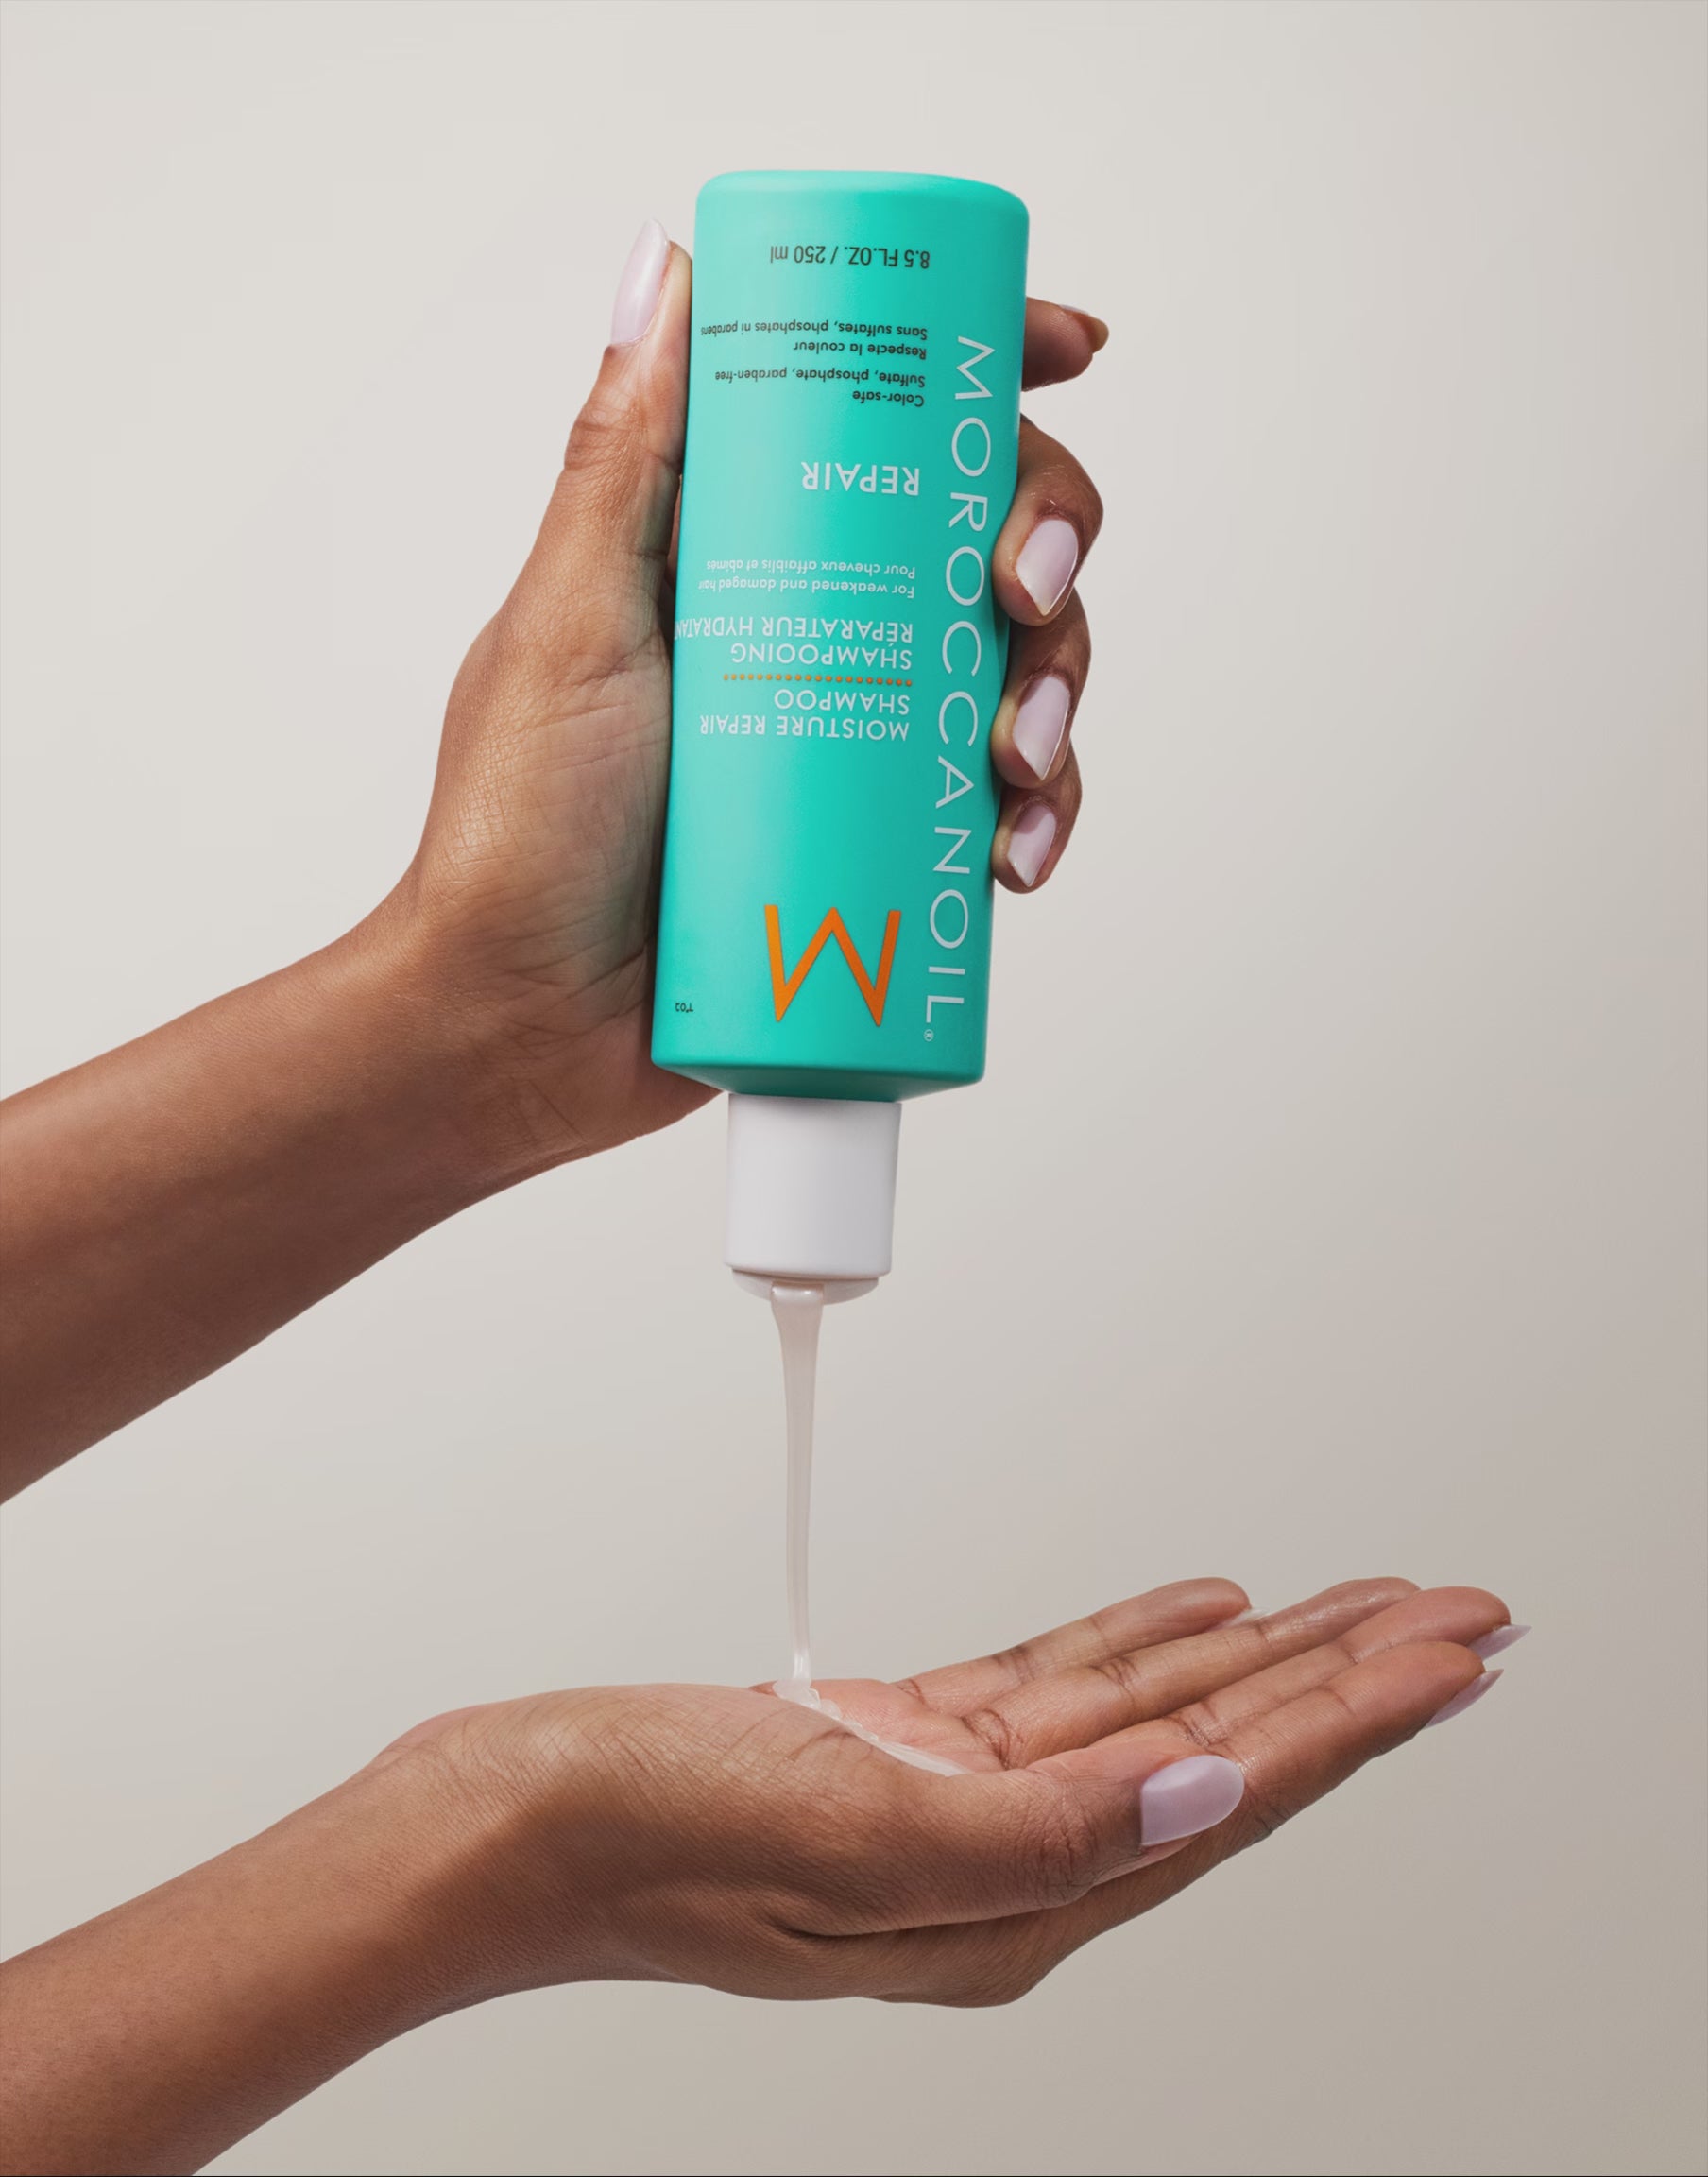 Moisture Repair Shampoo – Moroccanoil